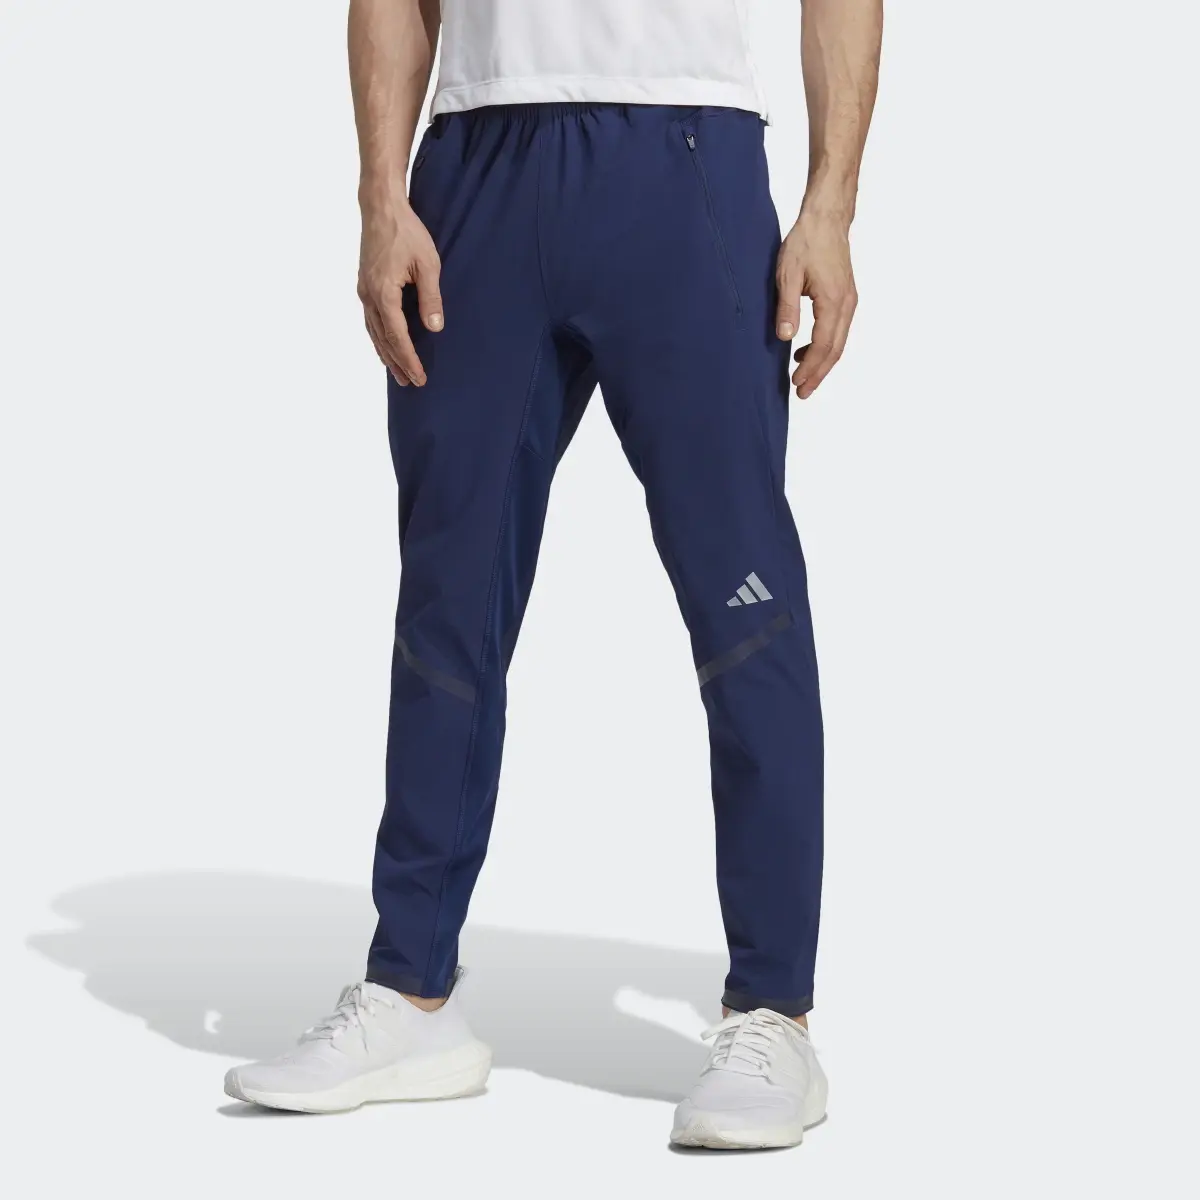 Adidas Designed for Training CORDURA® Workout Pants. 1